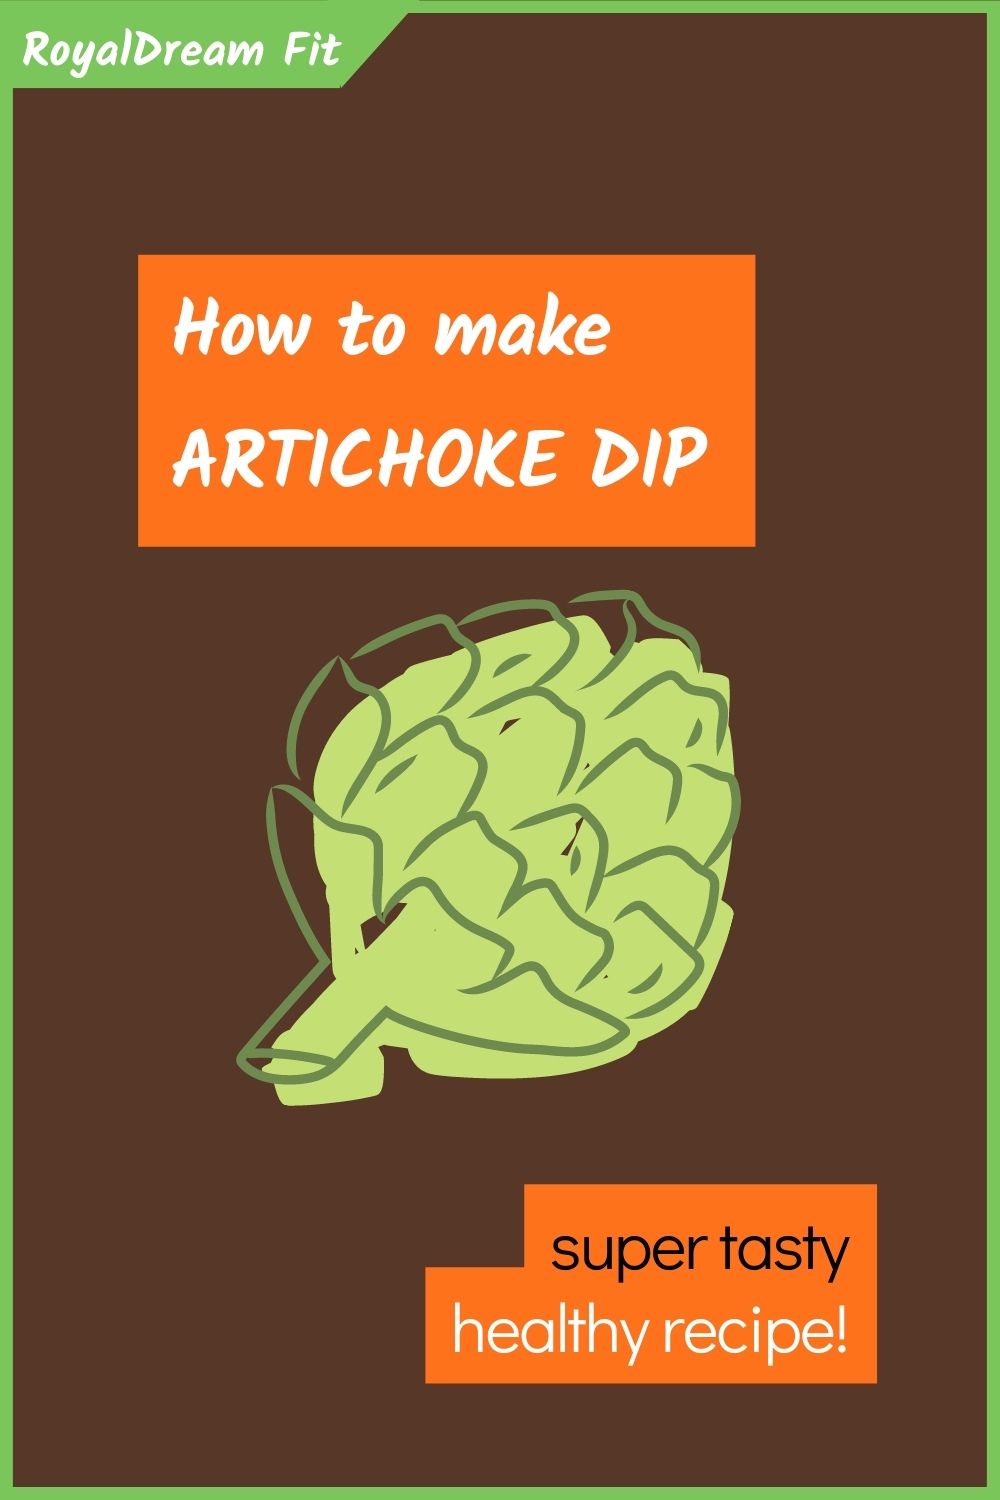 Try this super tasty healthy artichoke dip recipe!